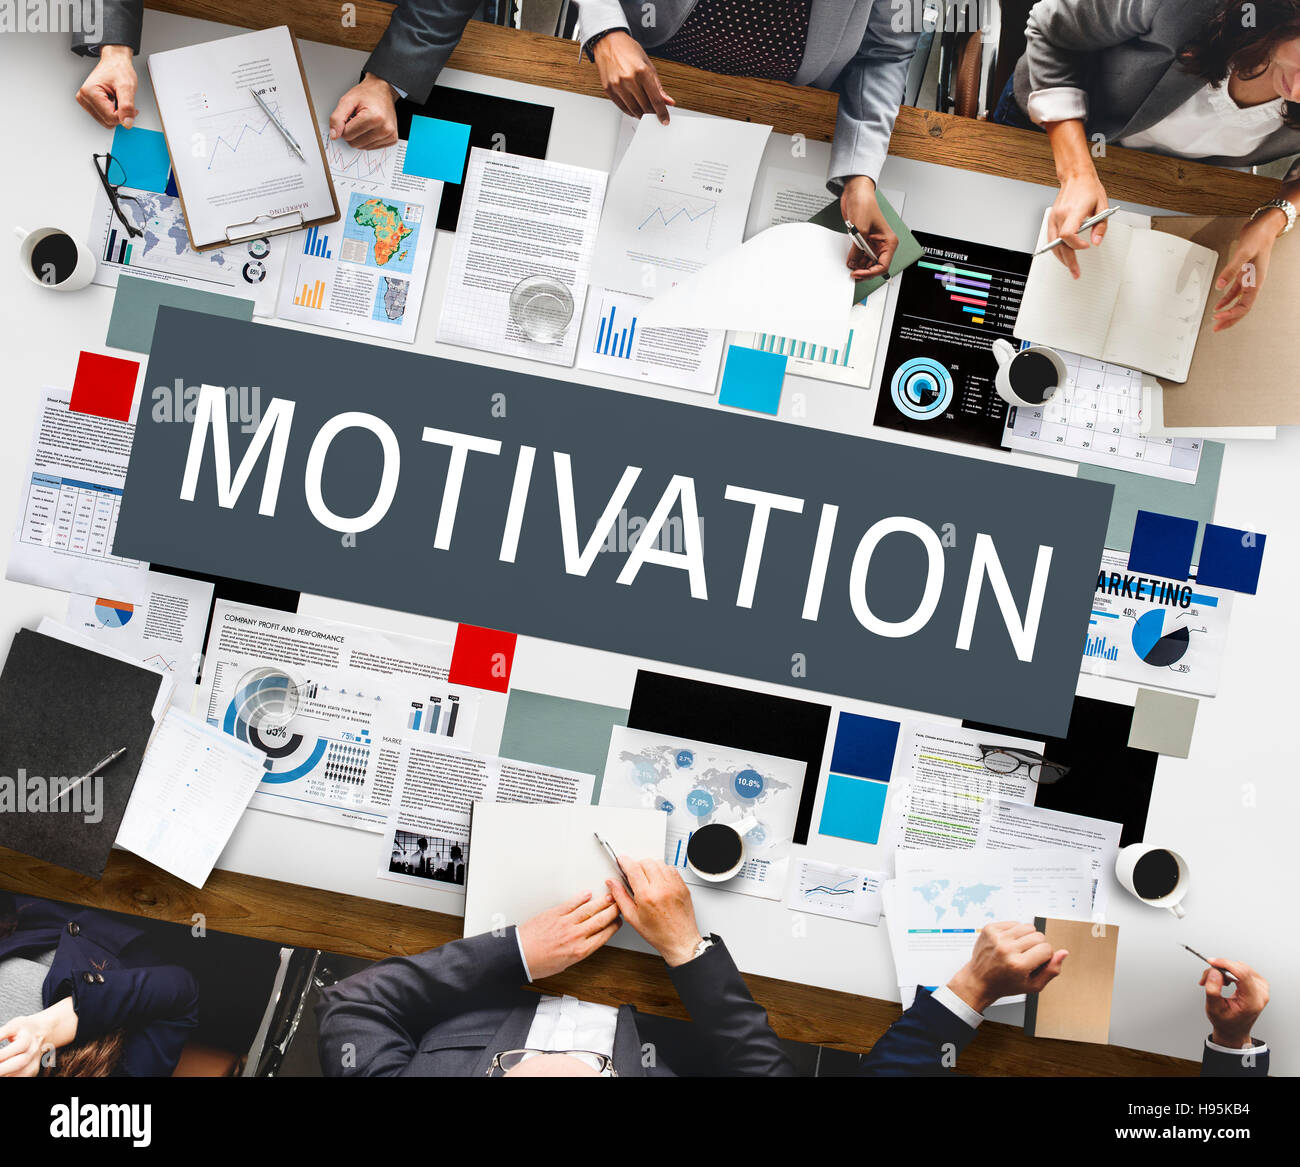 Motivation Aspiration Enthusiasm Incentive Inspire Concept Stock Photo